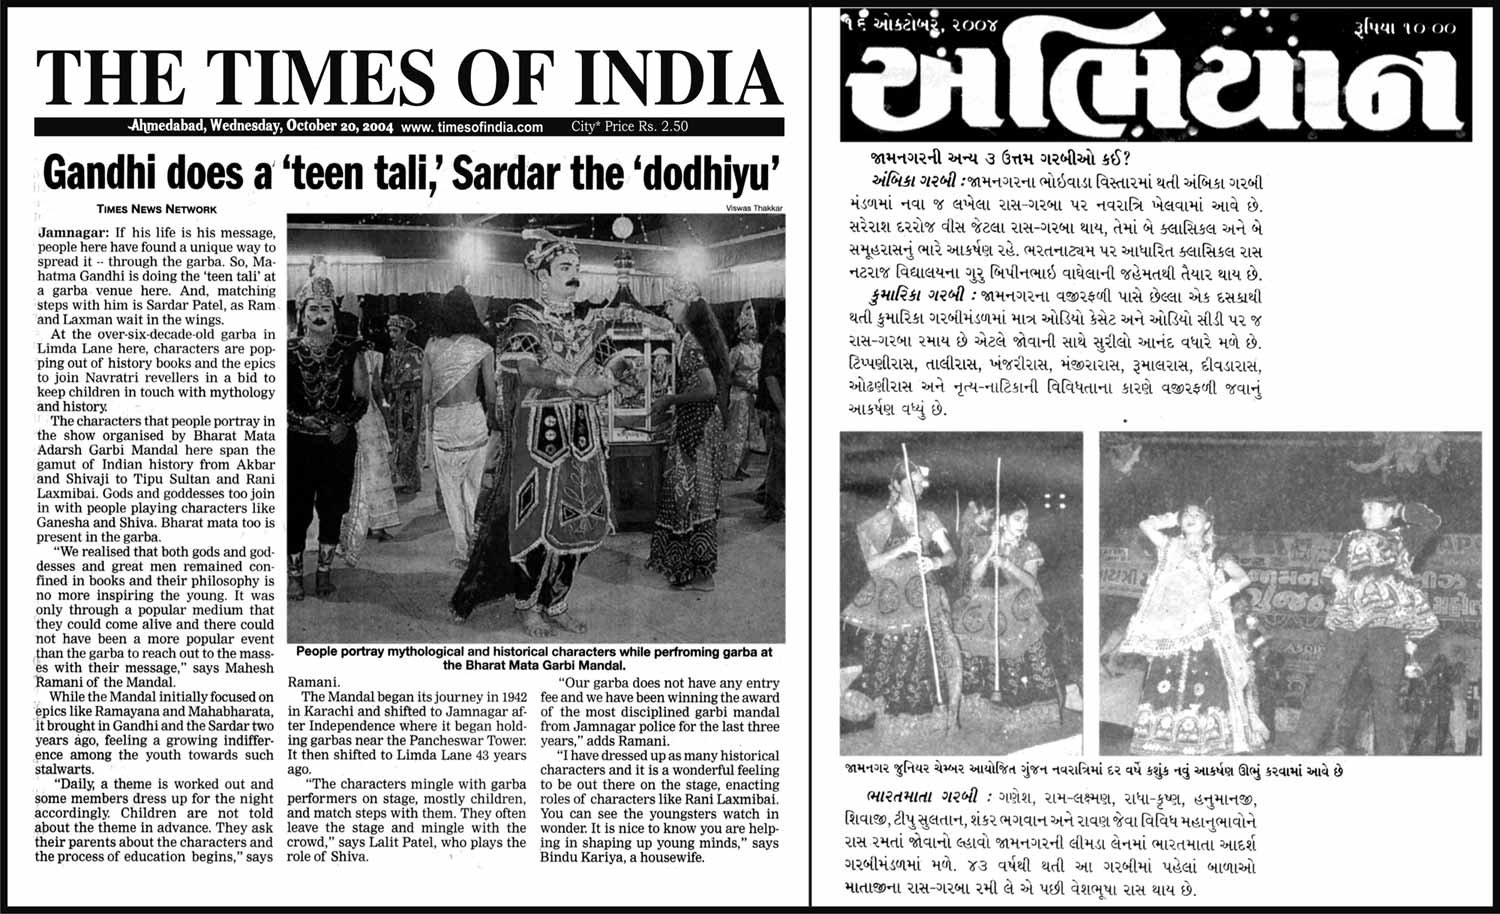 Bharatmata Adarsh Garbi Mandal in Times of India News